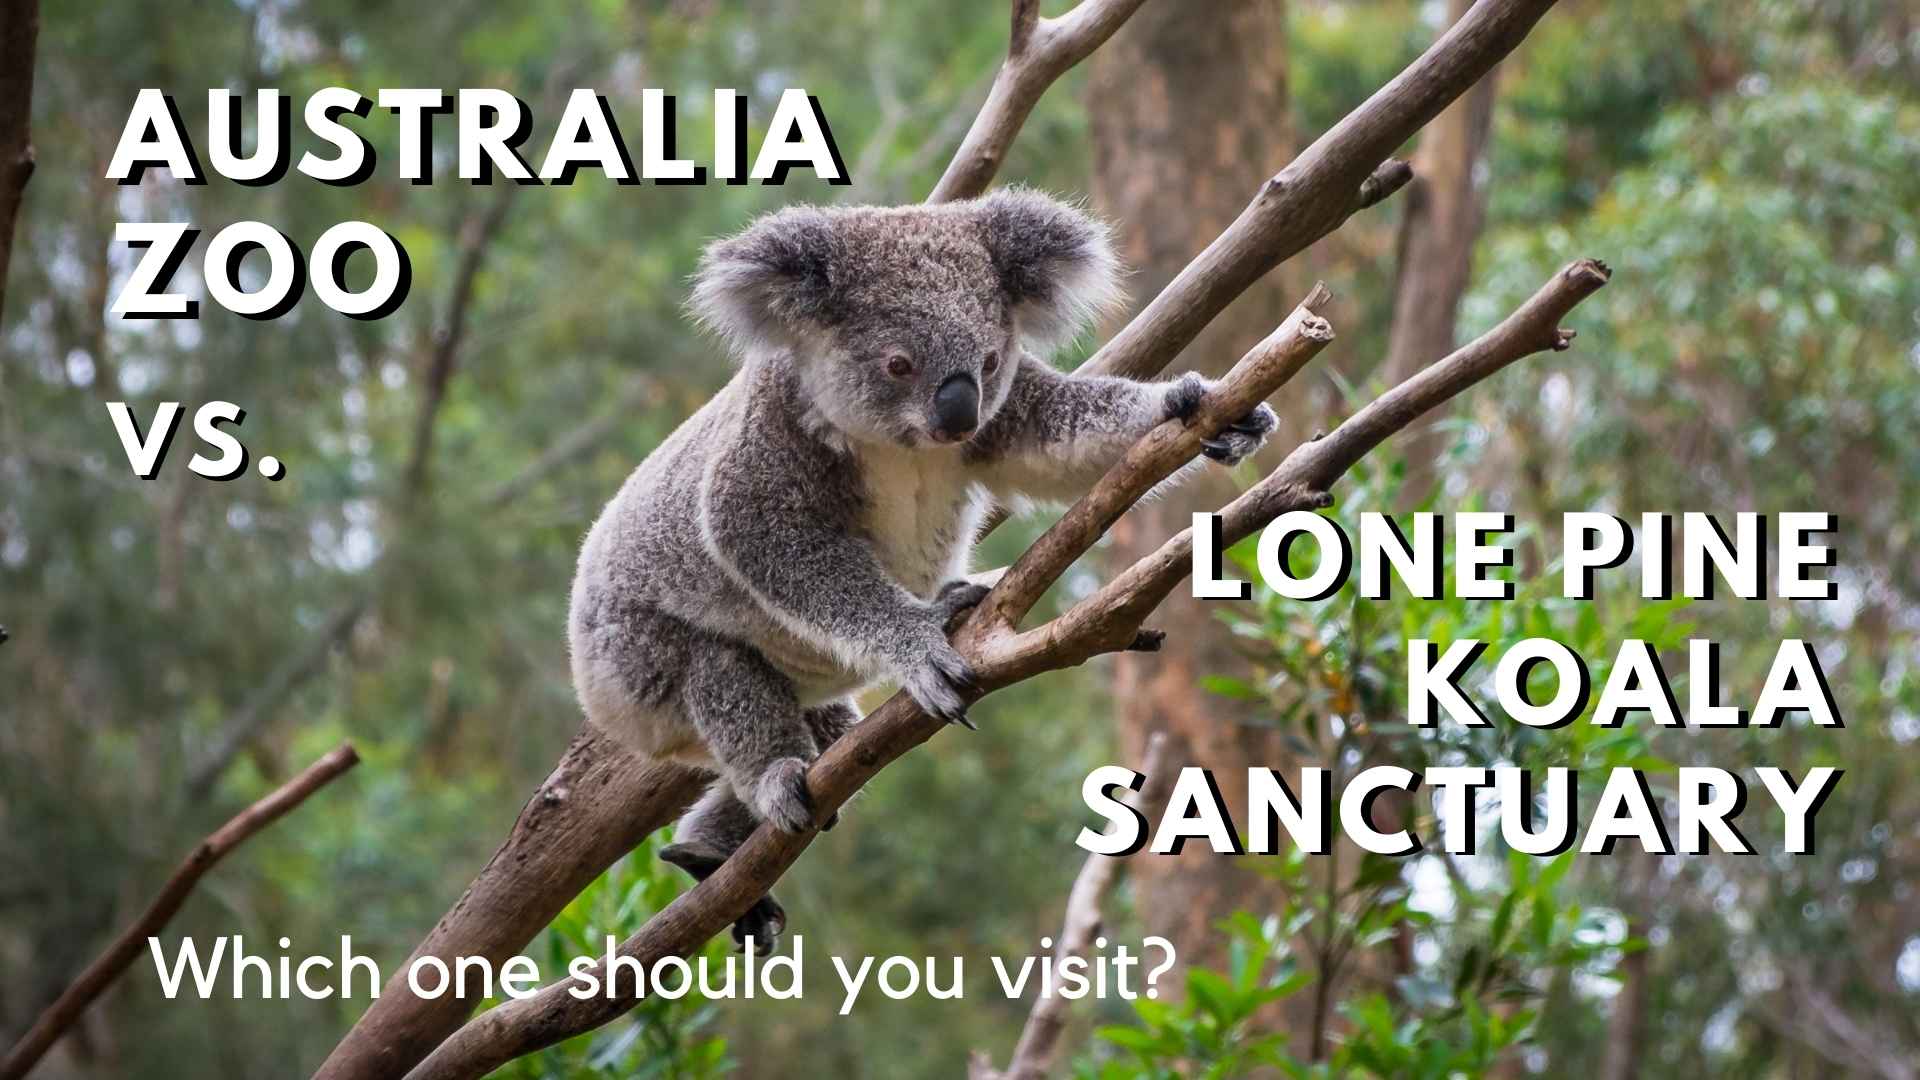 Australia zoo vs lone pine koala sanctuary Lone pine koala sanctuary or australia zoo Brisbane to Australia Zoo Brisbane to Lone Pine Koala Sanctuary Lone Pine Koala Sanctuary Tickets Australia Zoo Tickets Australia Zoo Koala, cuddling a koala in Australia, Feeding Kangaroos, petting kangaroos